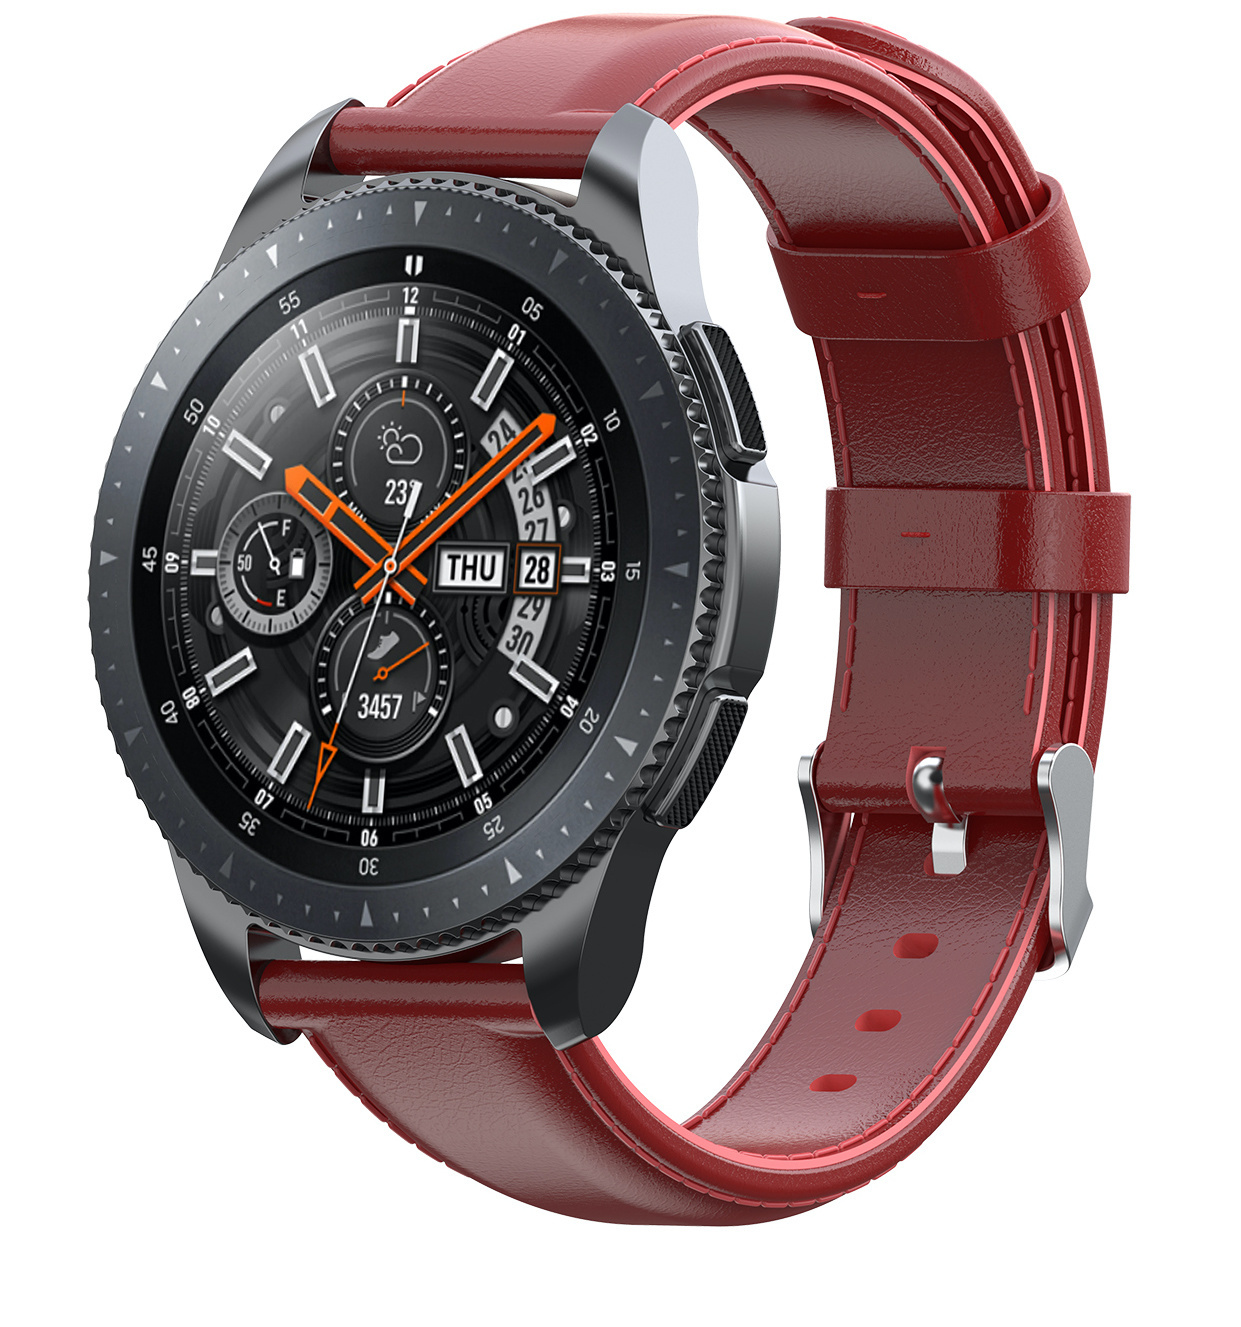 Cinturino in pelle per Samsung Galaxy Watch - rosso